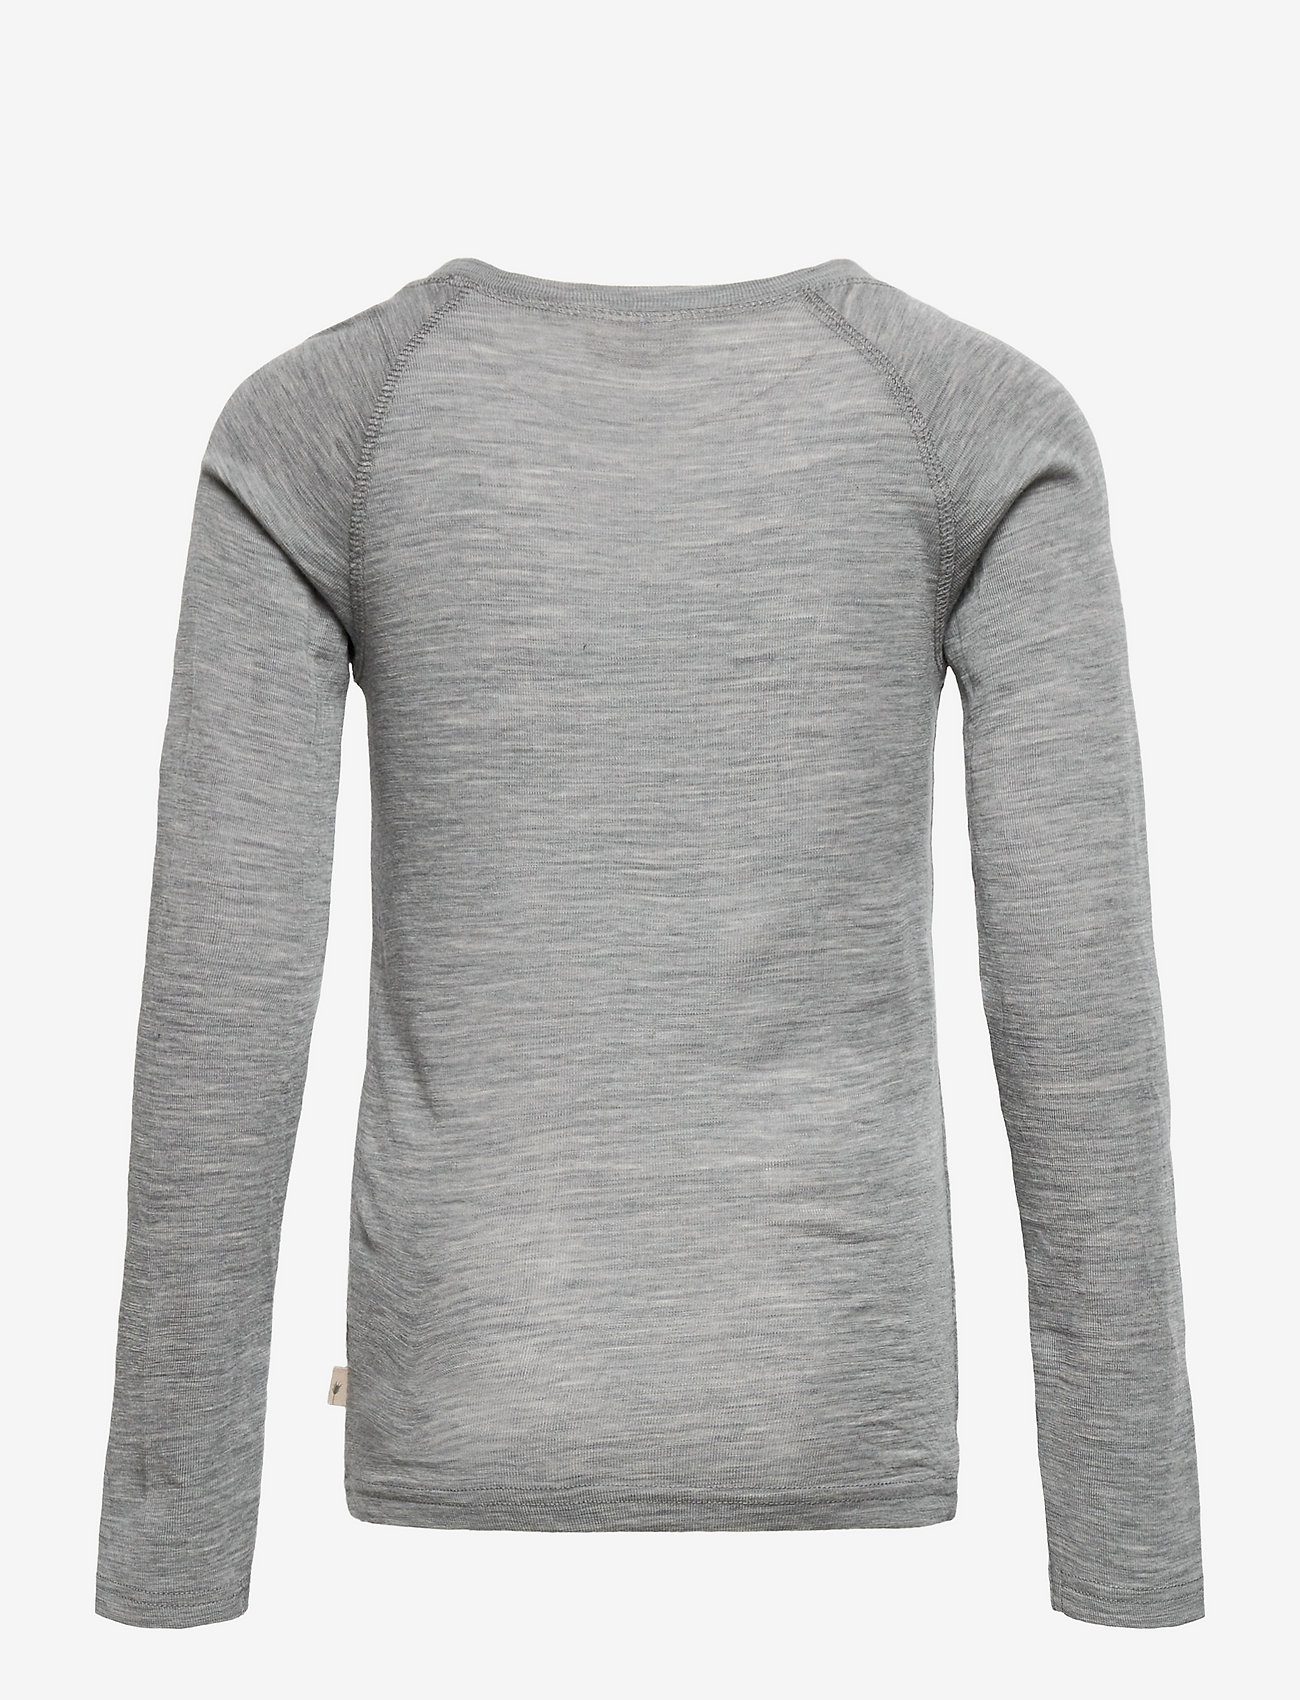 Wheat - Wool T-Shirt LS - melange grey - 1